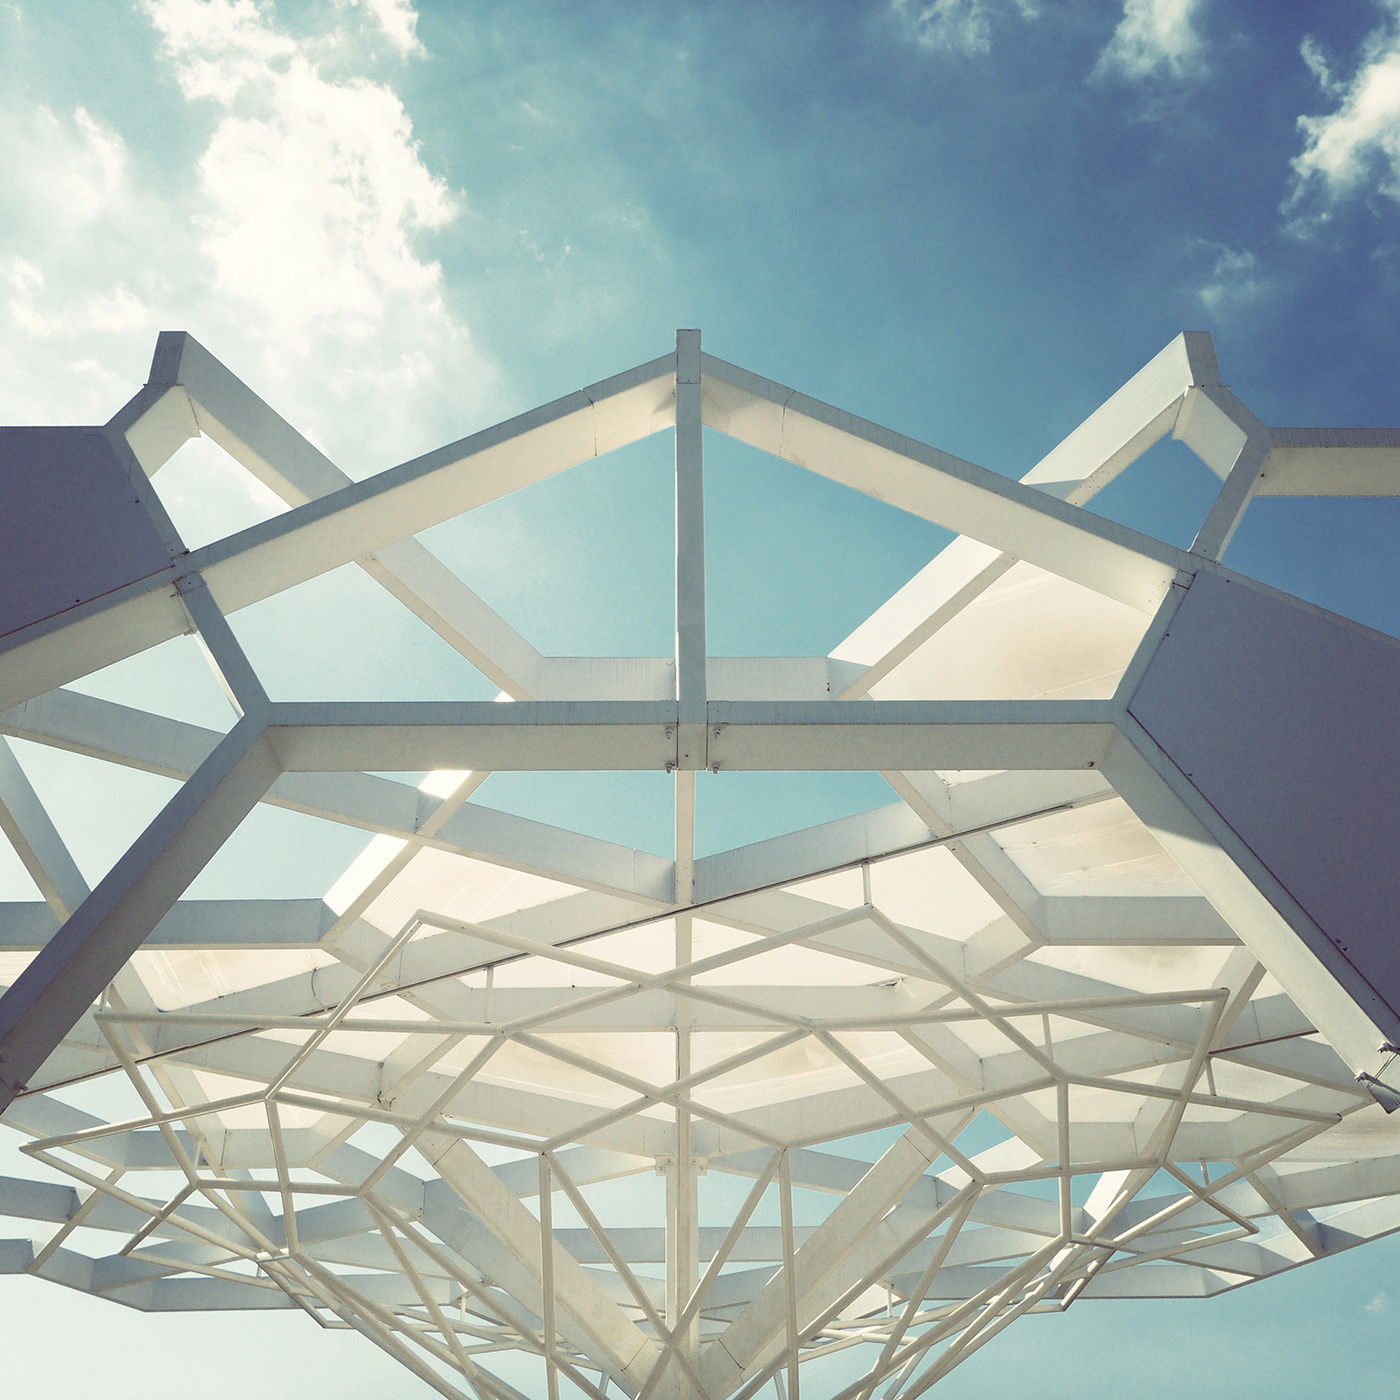 Turkish Pavilion Expo 2015 <br />Location: Milano, Italy <br />Architects: Genius Loci Architettura